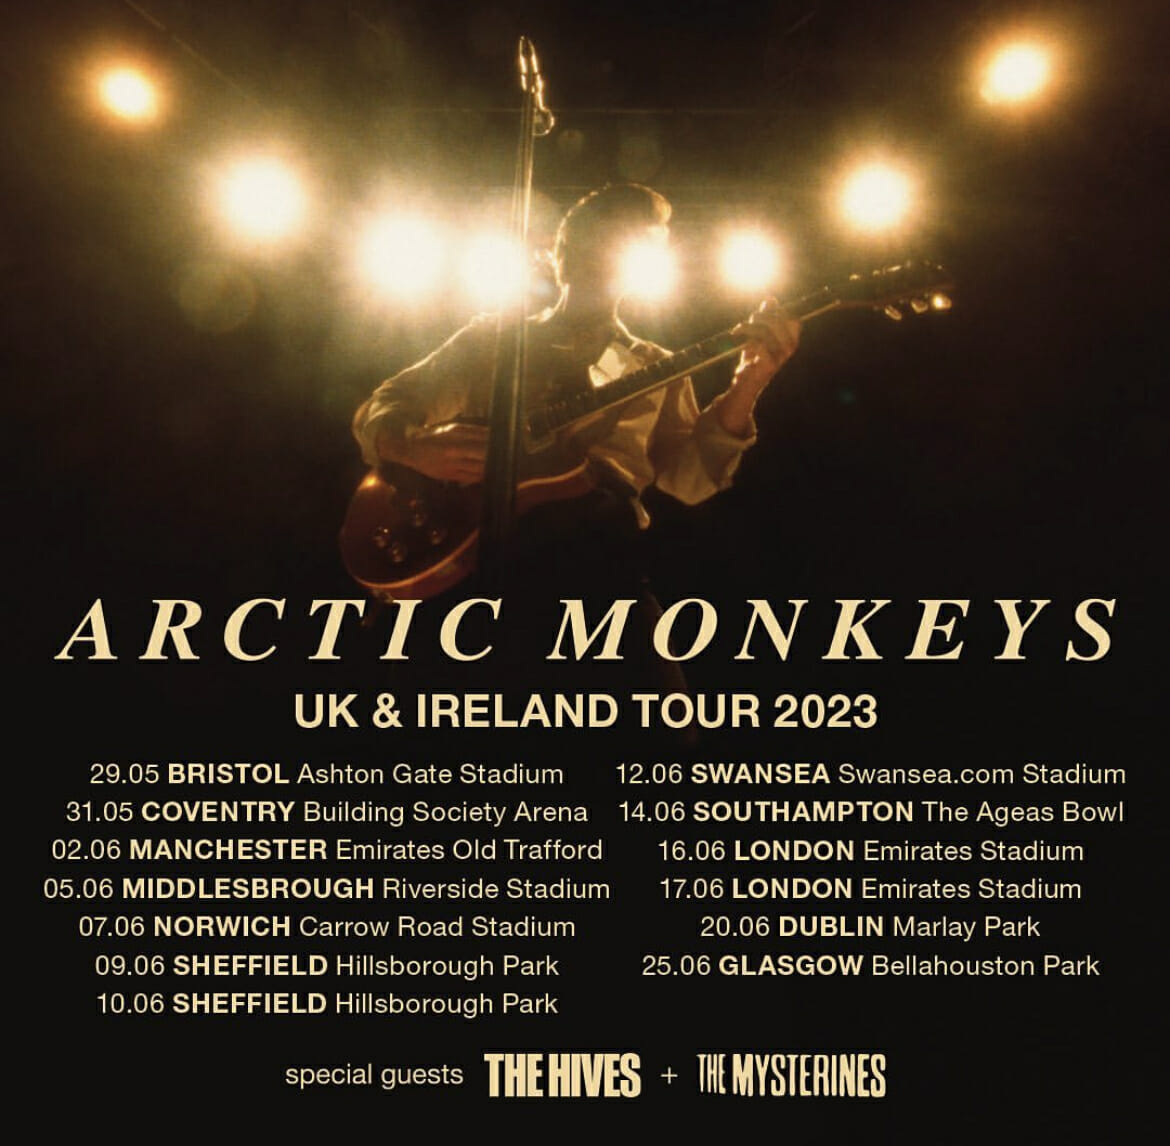 arctic monkeys tour uk 2022